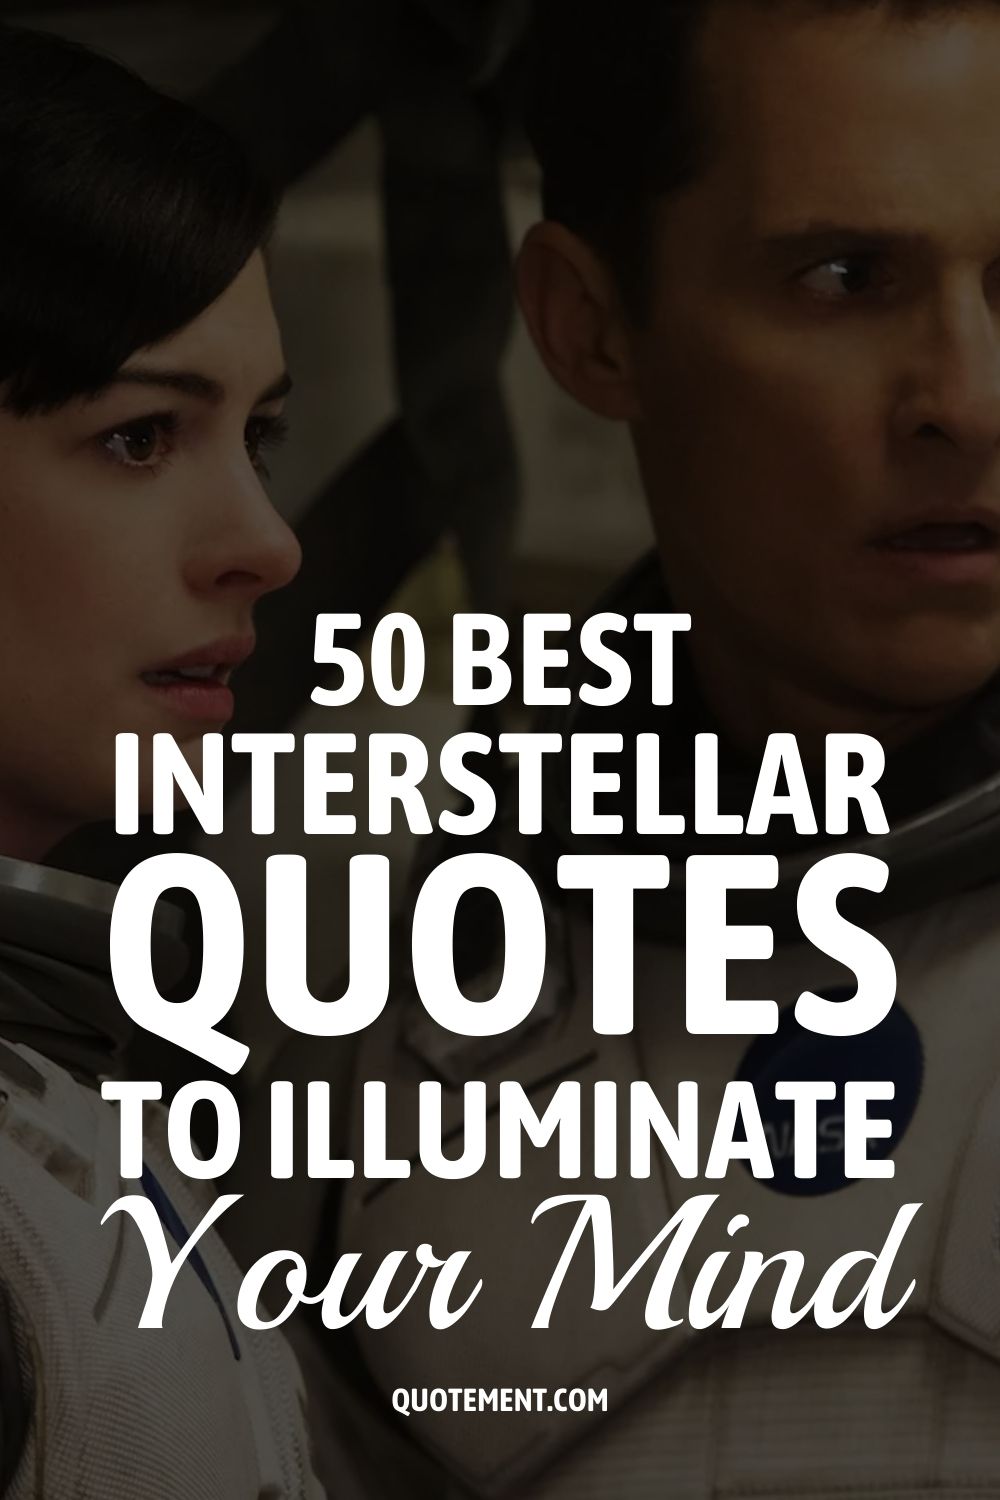 50 Best Interstellar Quotes To Illuminate Your Mind
